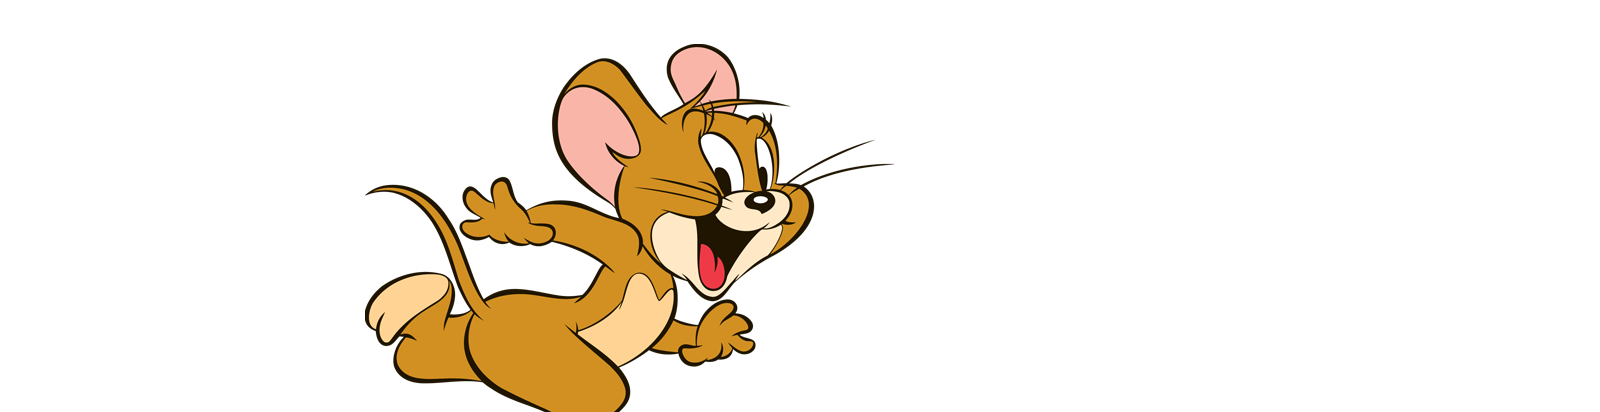 Tom and Jerry | Games, Videos & Downloads | Cartoon Network - ClipArt Best  - ClipArt Best